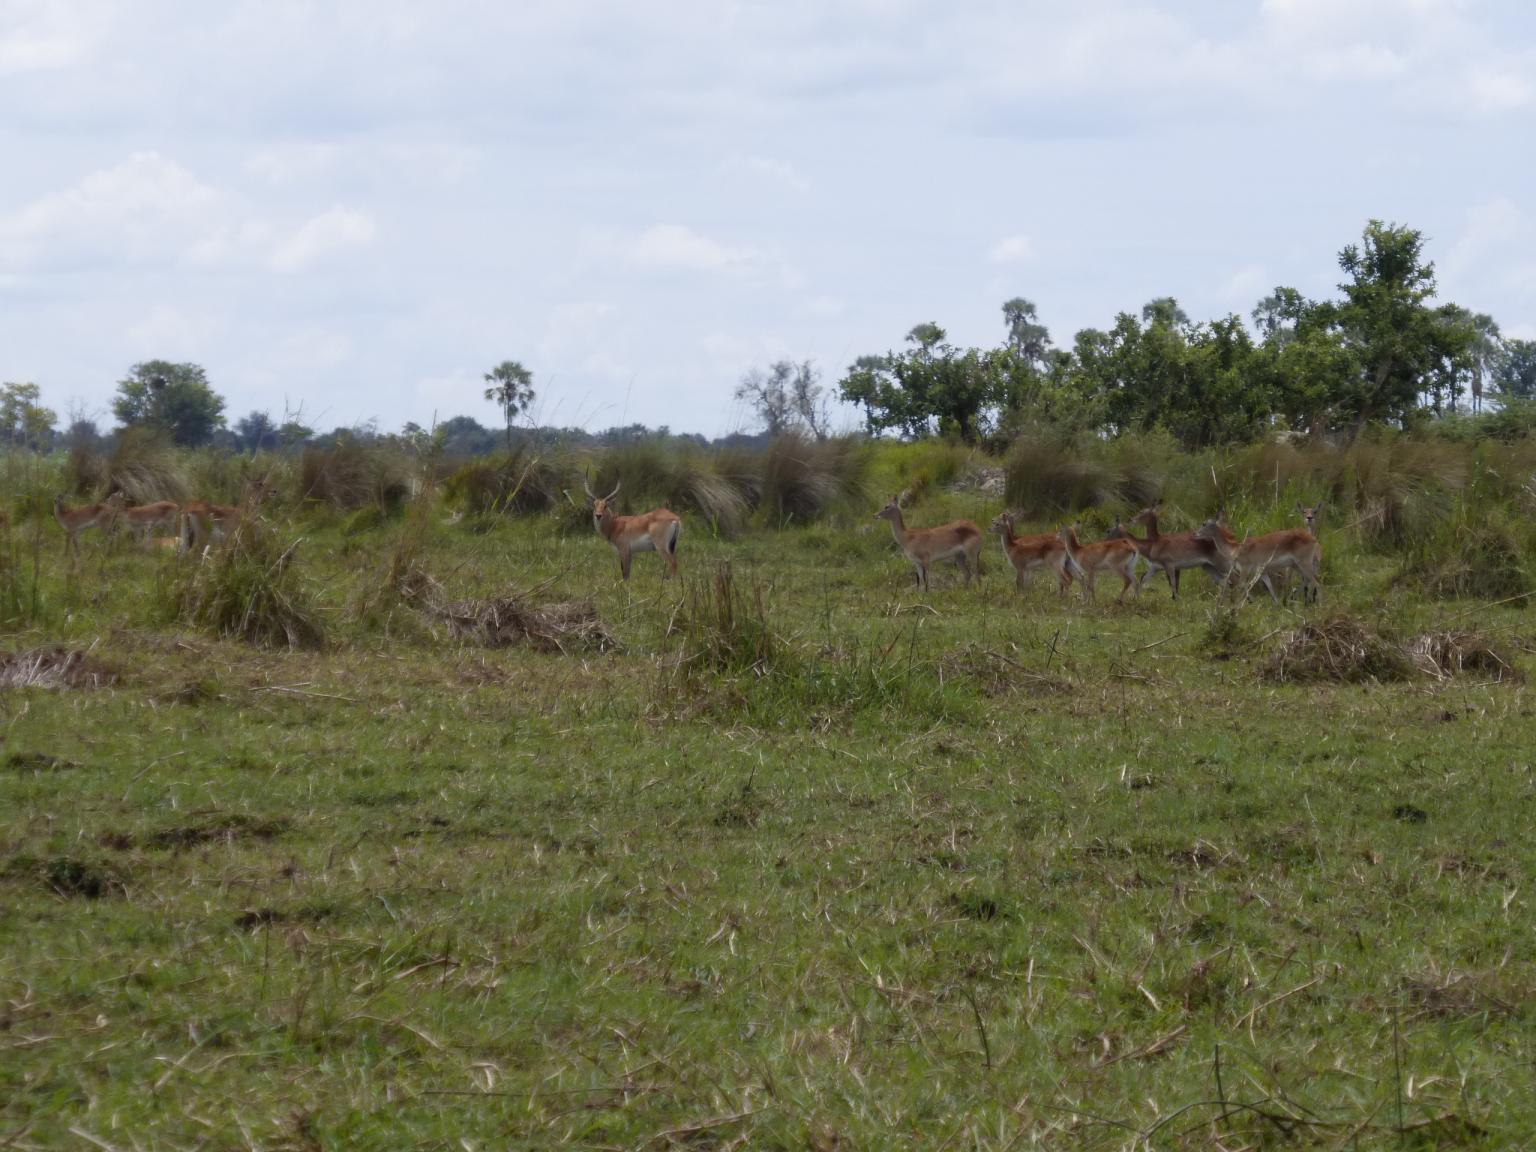 Impalas grazing in a floodplain during the dry season